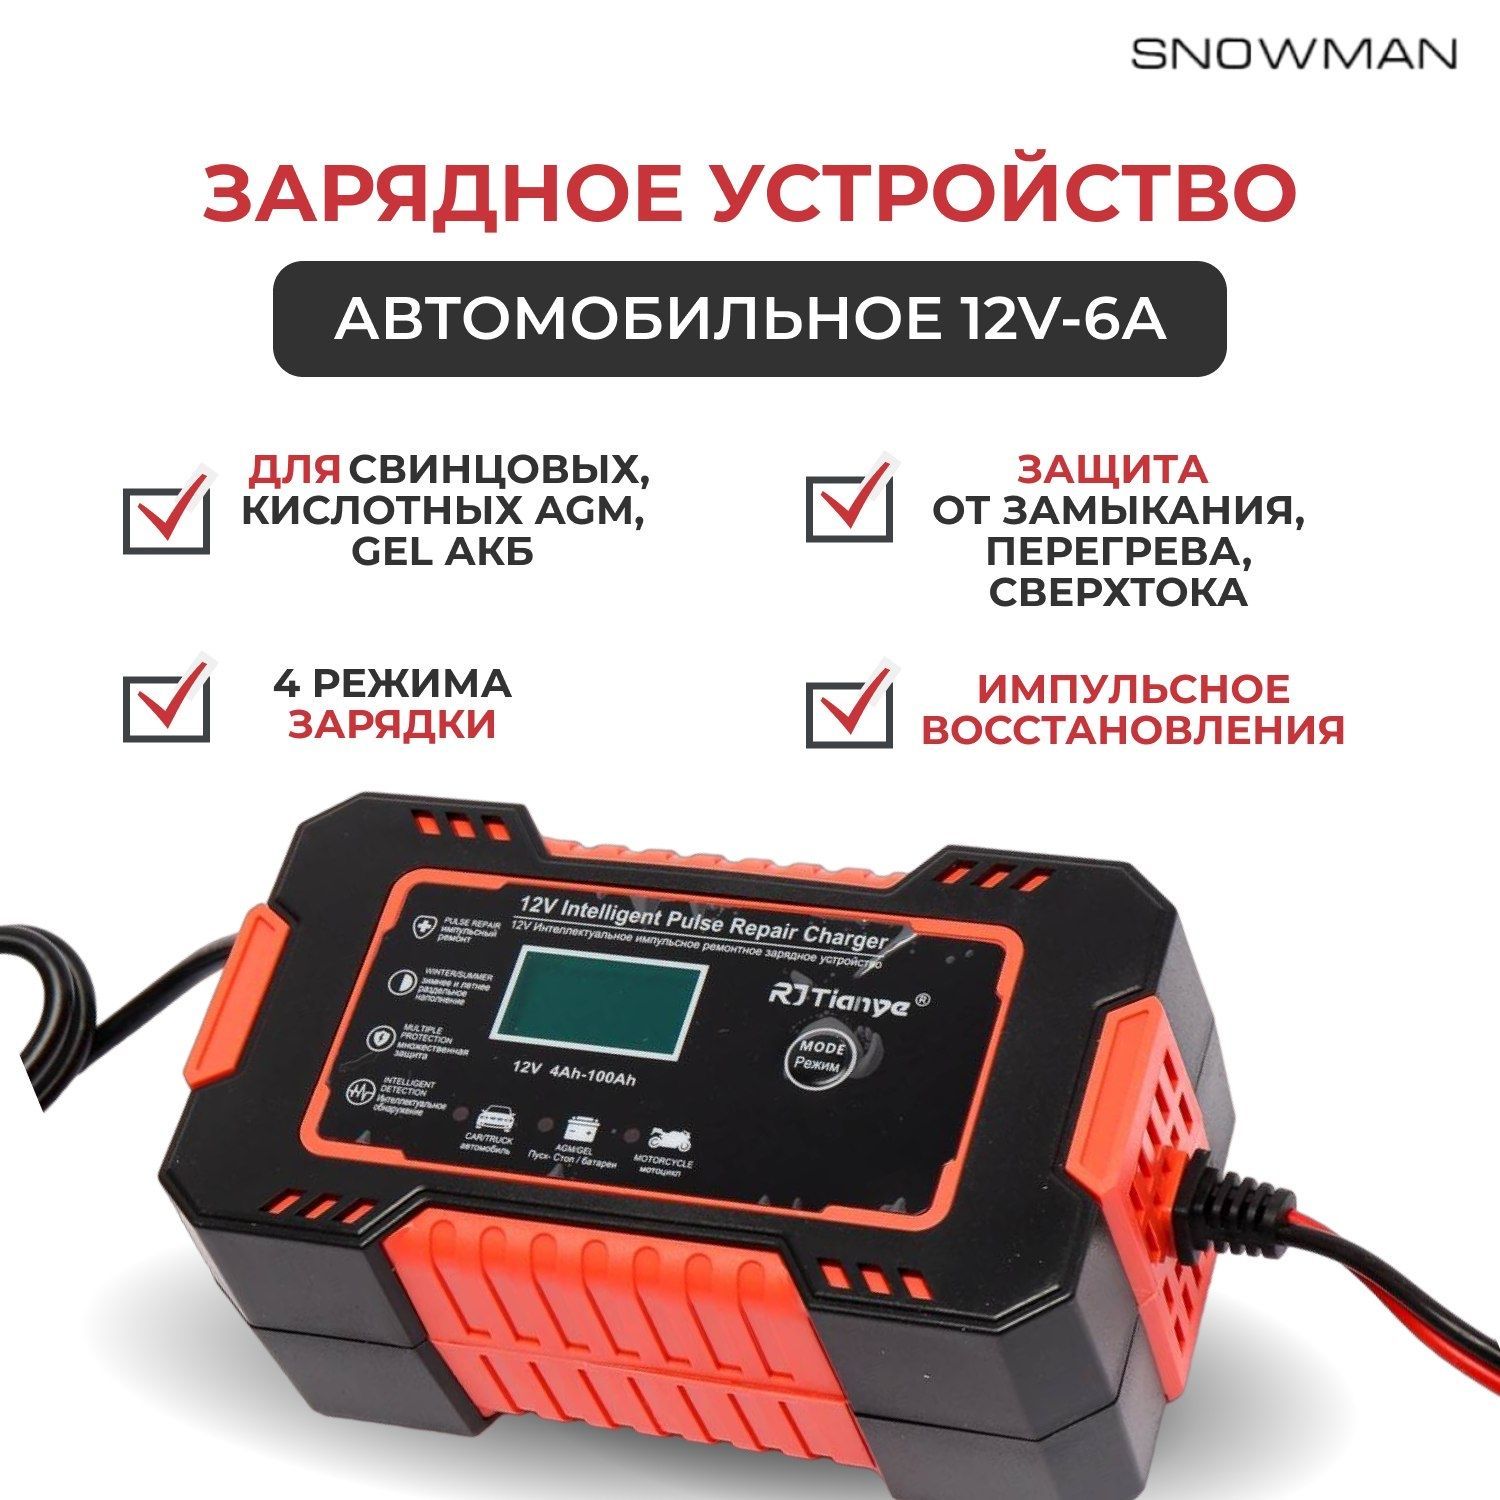 Зарядное устройство для аккумулятора автомобиля купить по низким ценам в ТД СОРОКИН